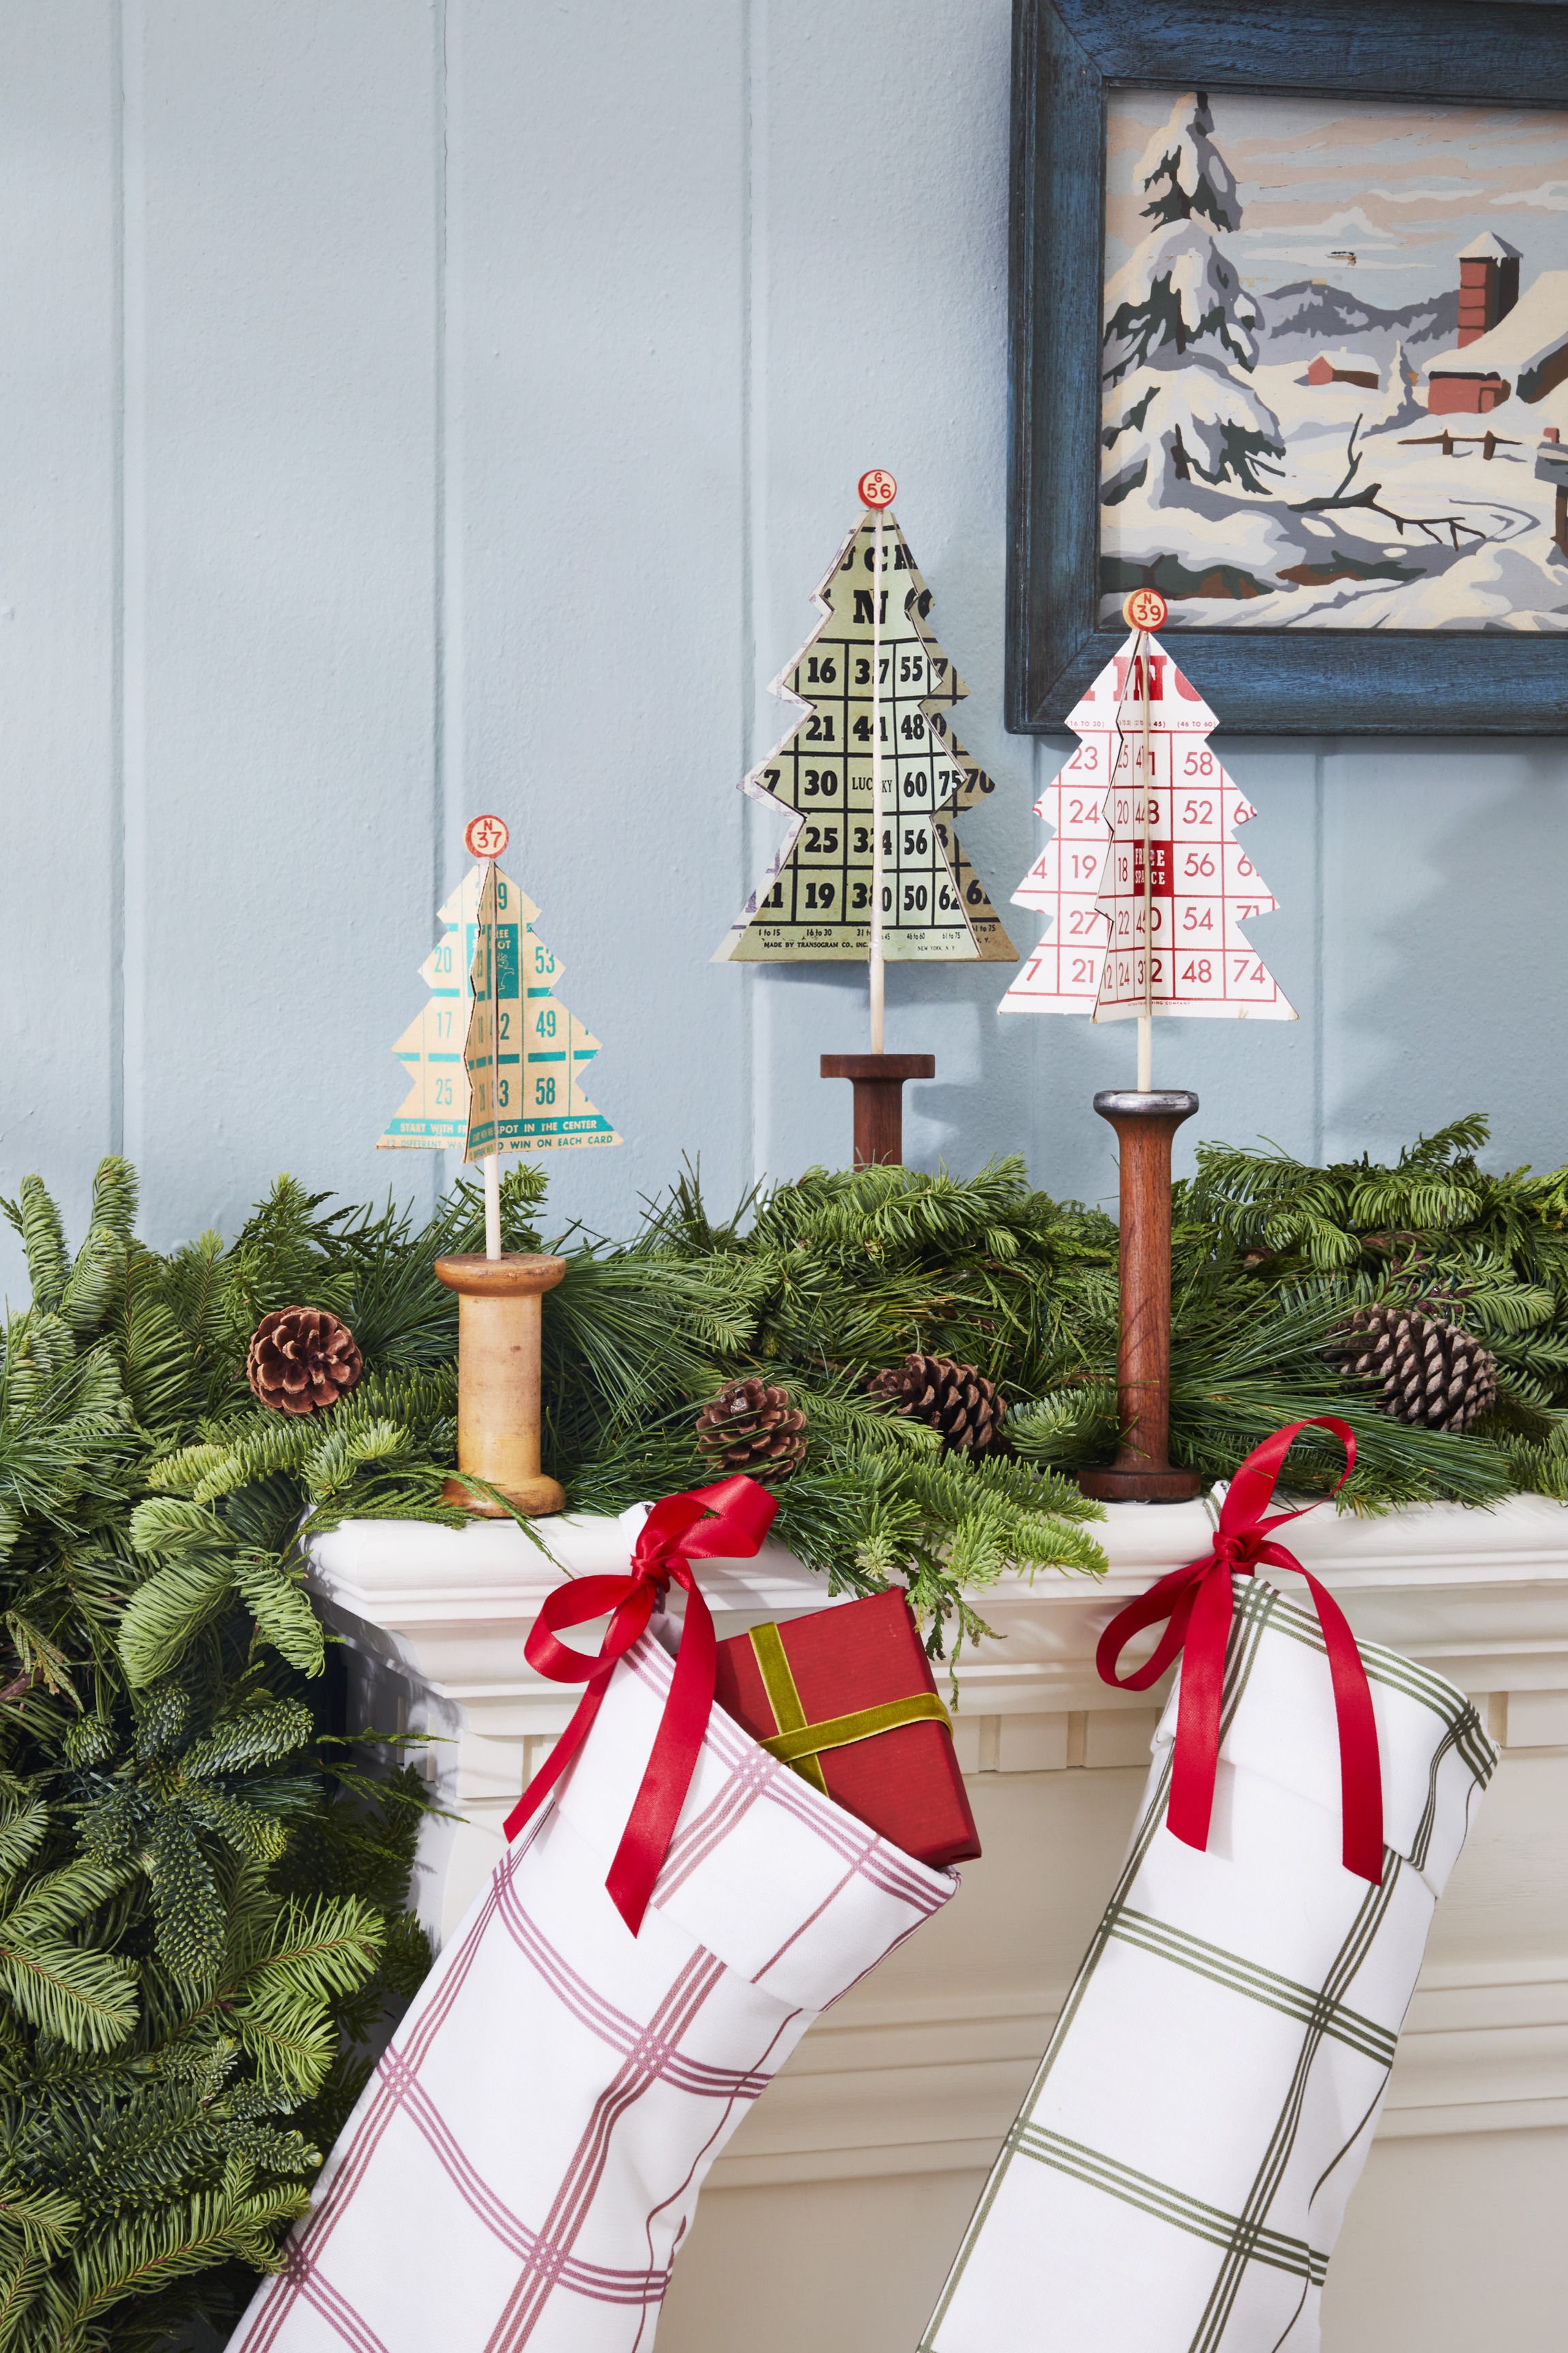 20 DIY Christmas Ornaments to Make + Ultimate Christmas Round-Up